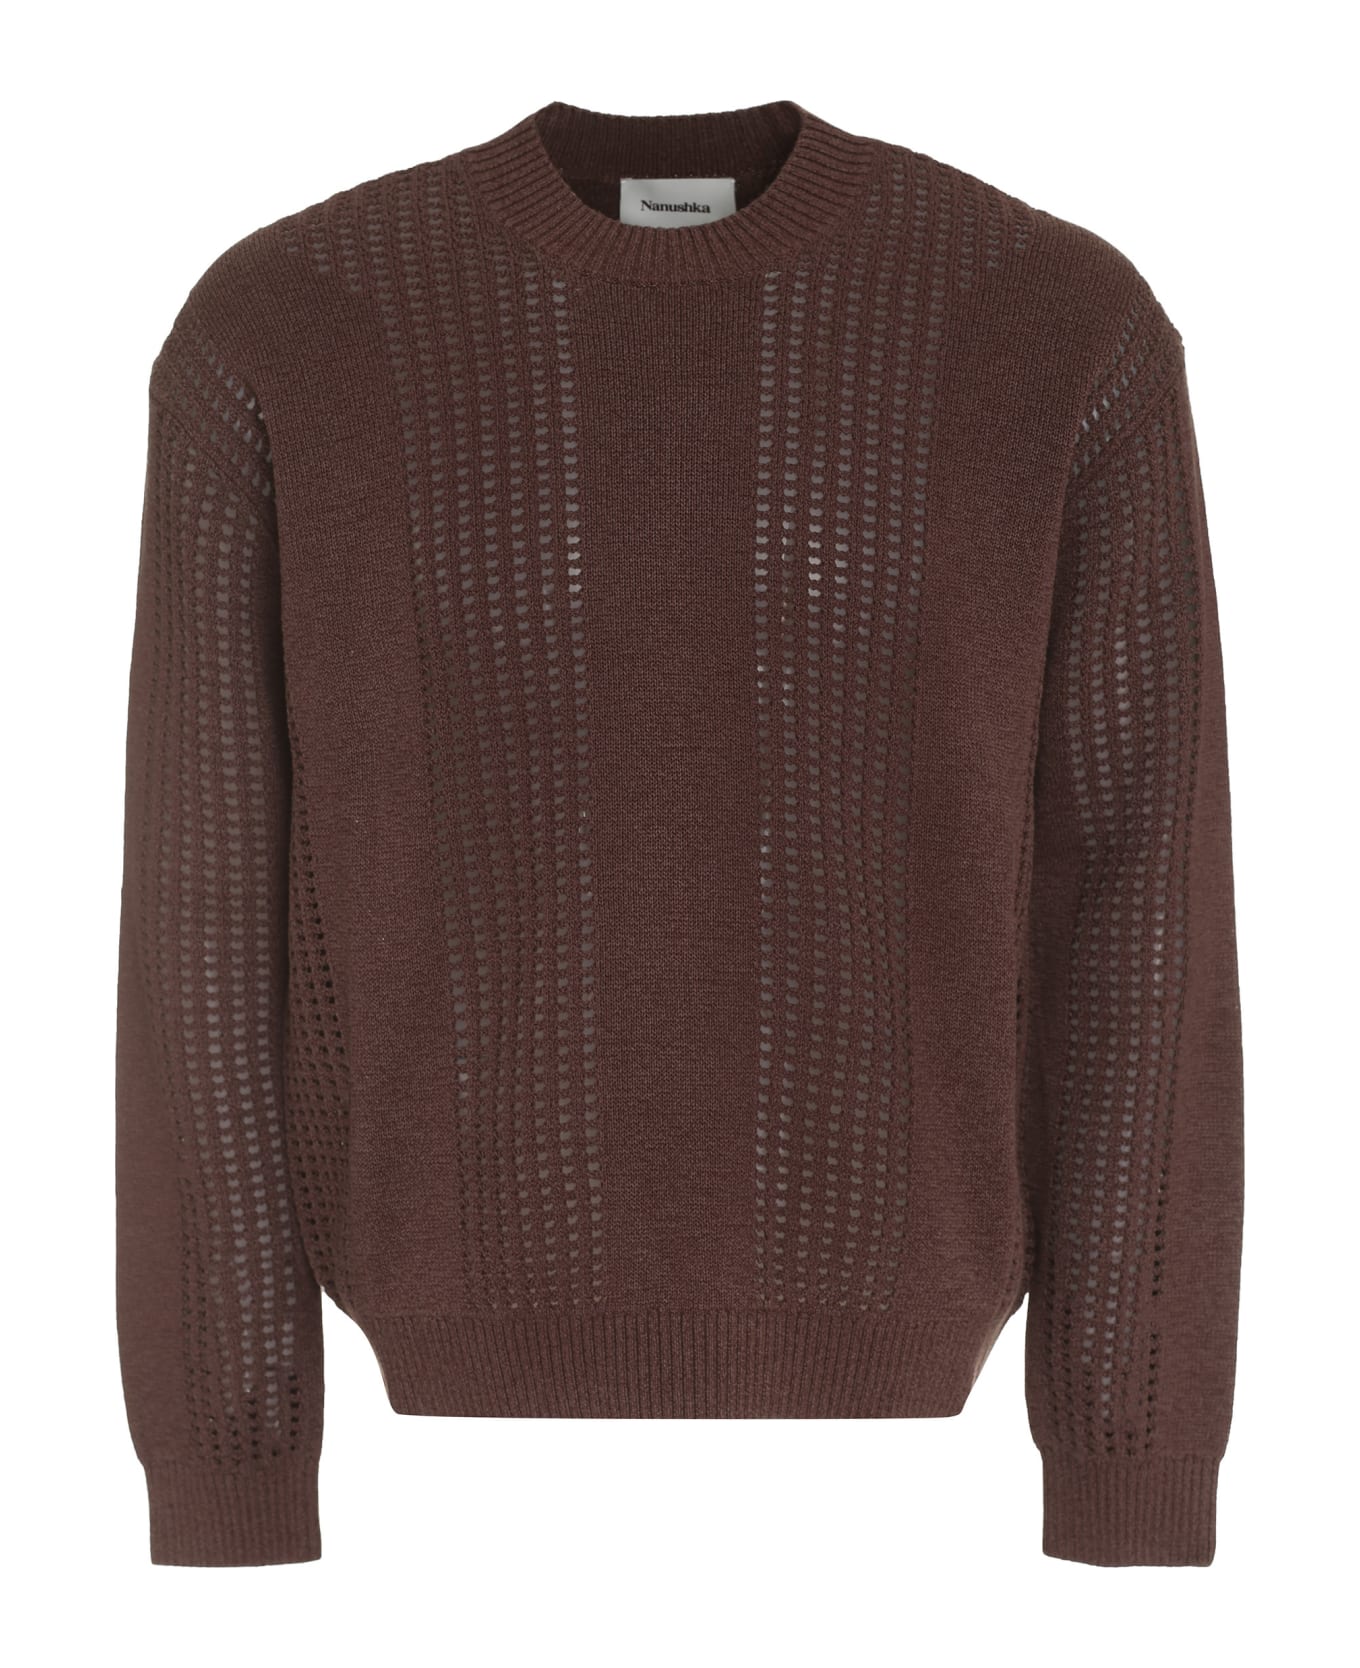 Nanushka Jace Cotton Blend Crew-neck Sweater - brown